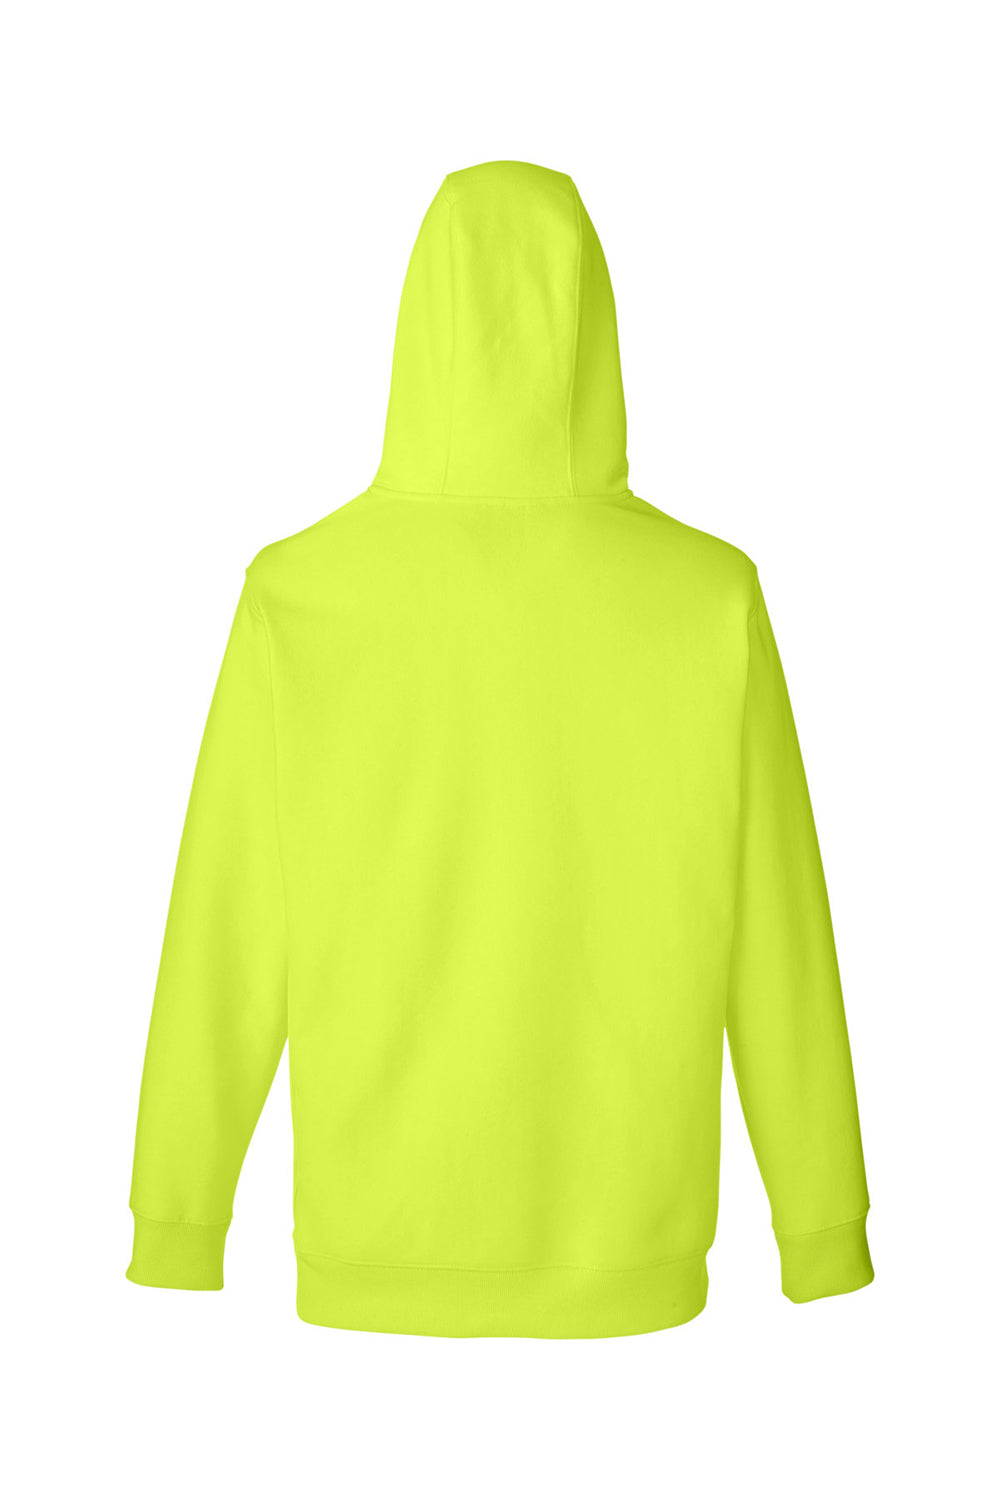 Team 365 TT97 Mens Zone HydroSport 1/4 Zip Hooded Sweatshirt Hoodie Safety Yellow Flat Back